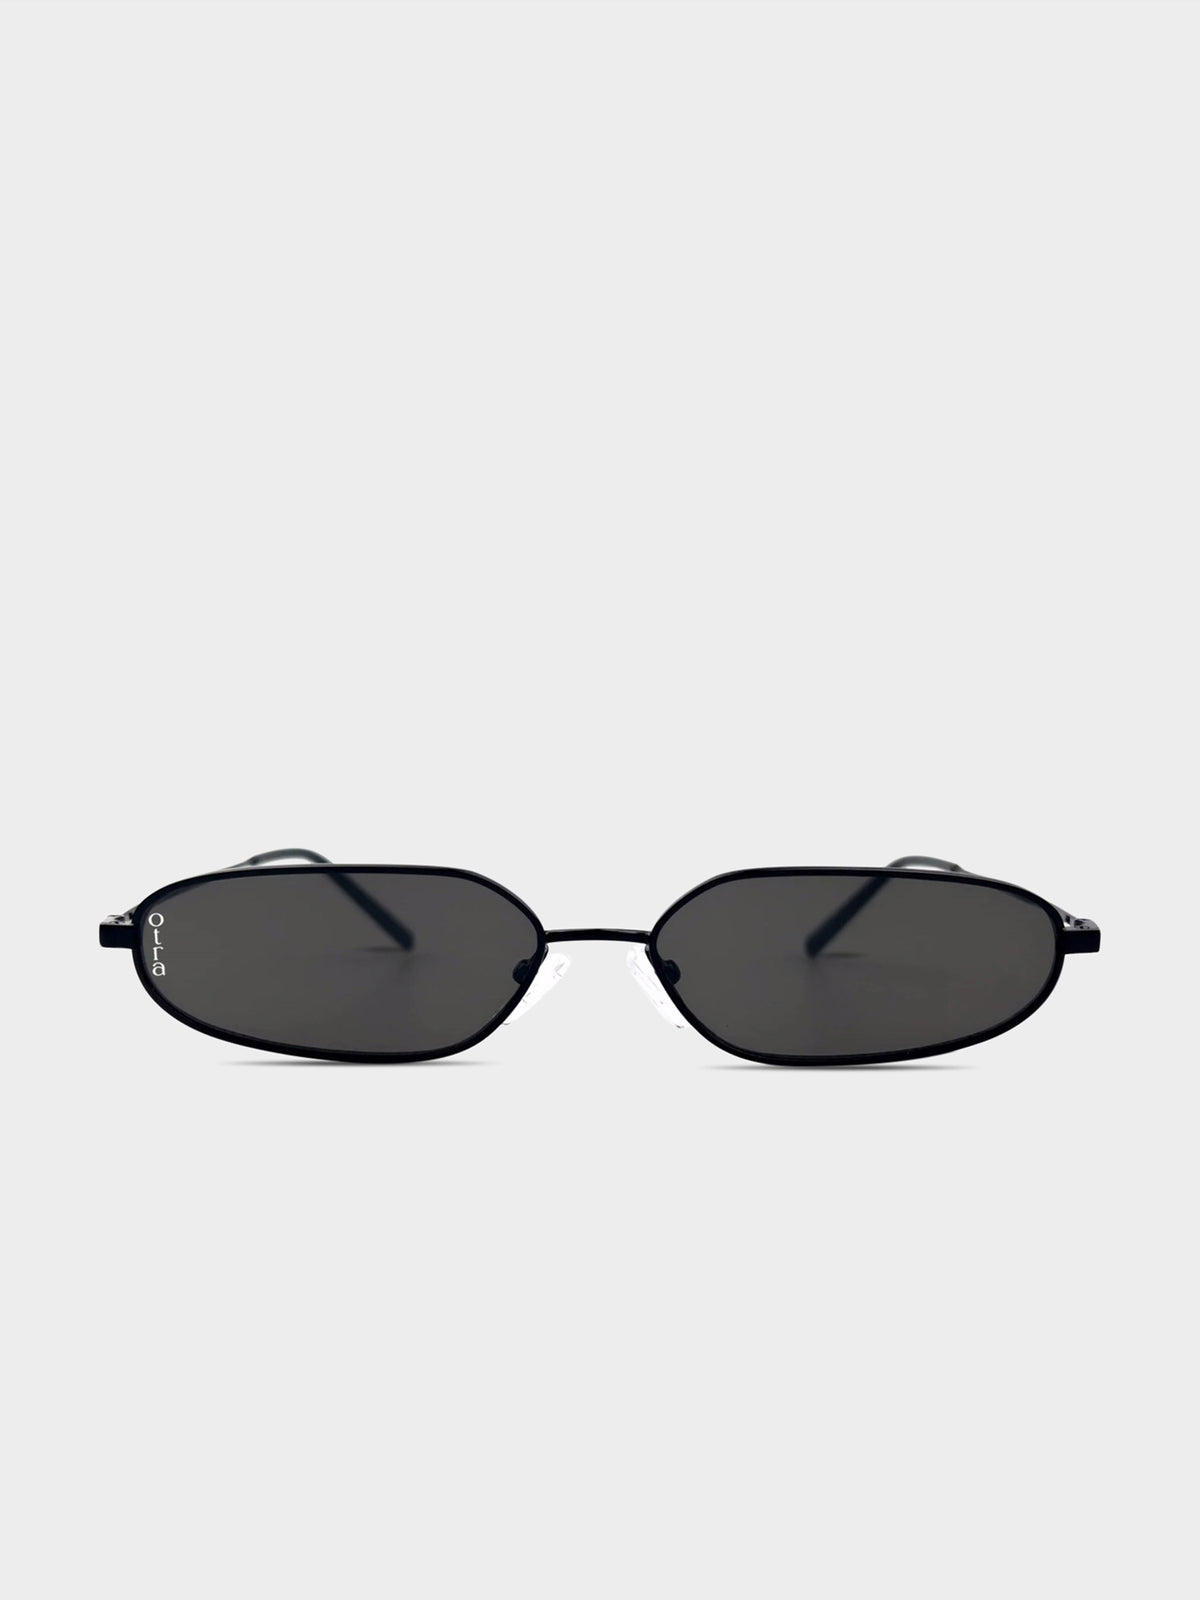 Drew Sunglasses in Black Smoke